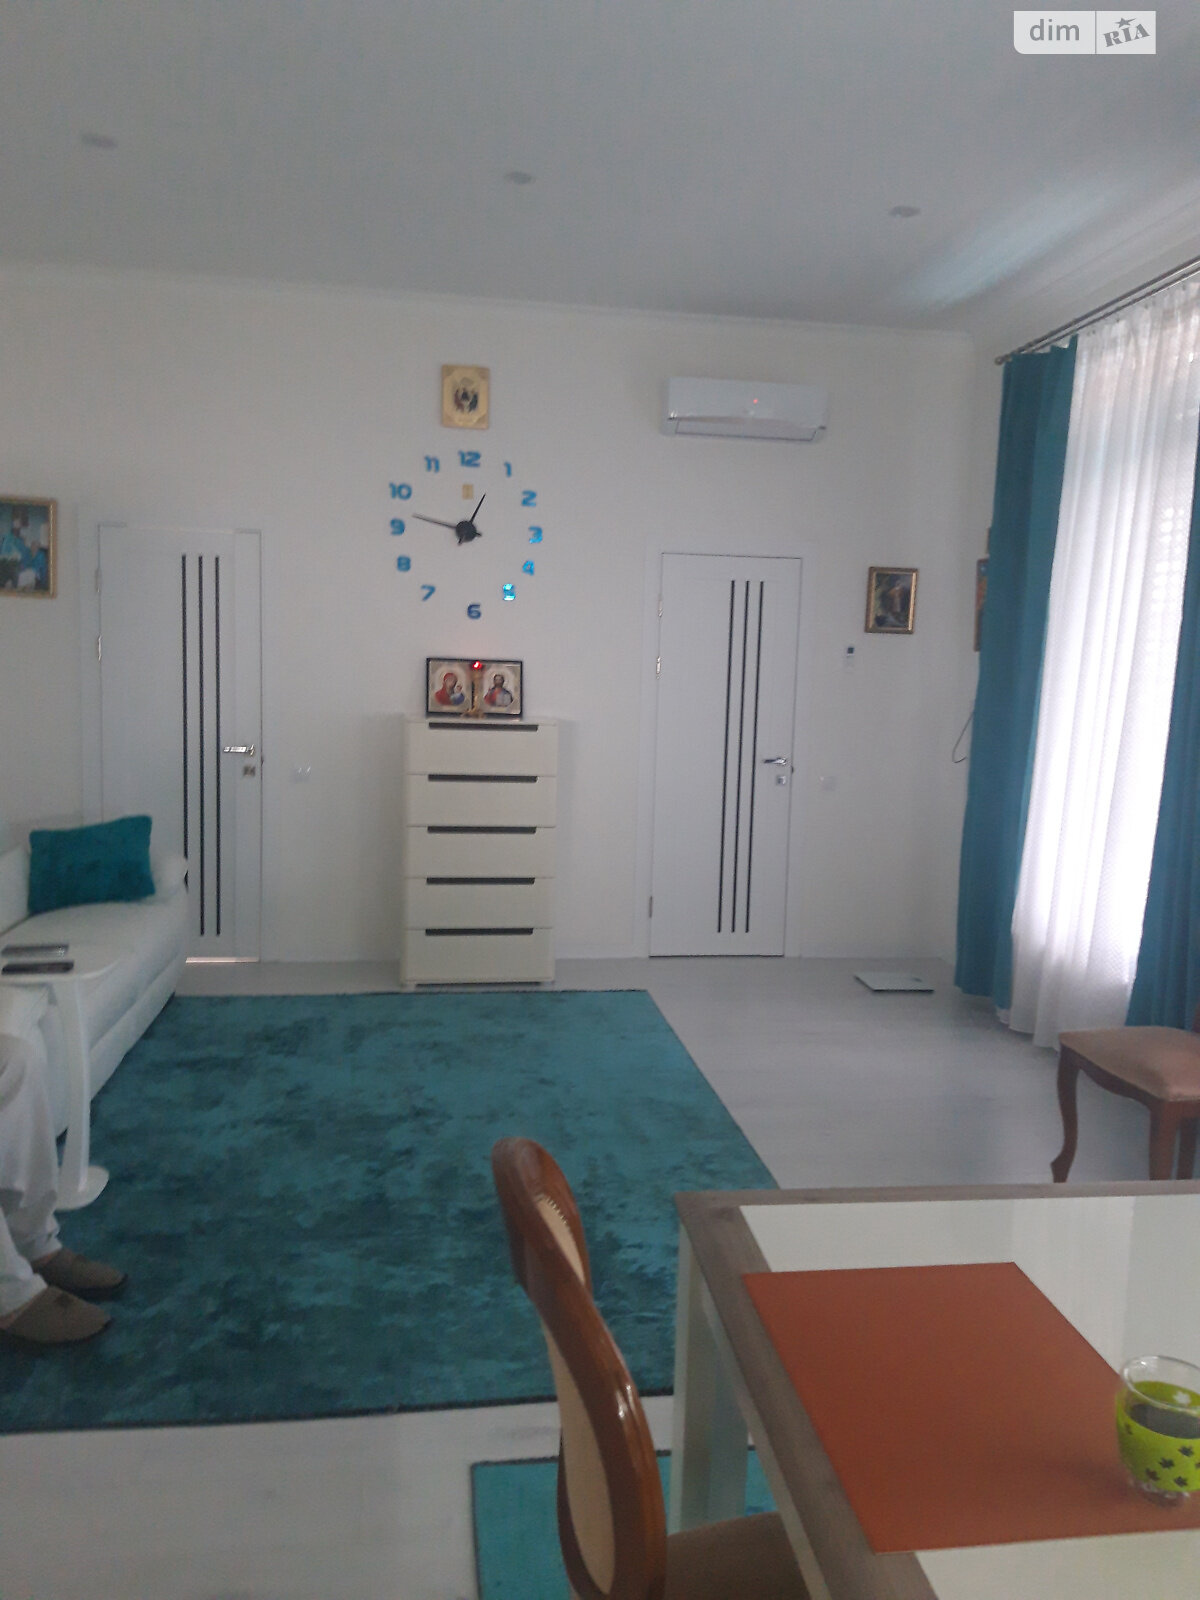 Продажа части дома в Одессе, район Совиньон, 3 комнаты фото 1